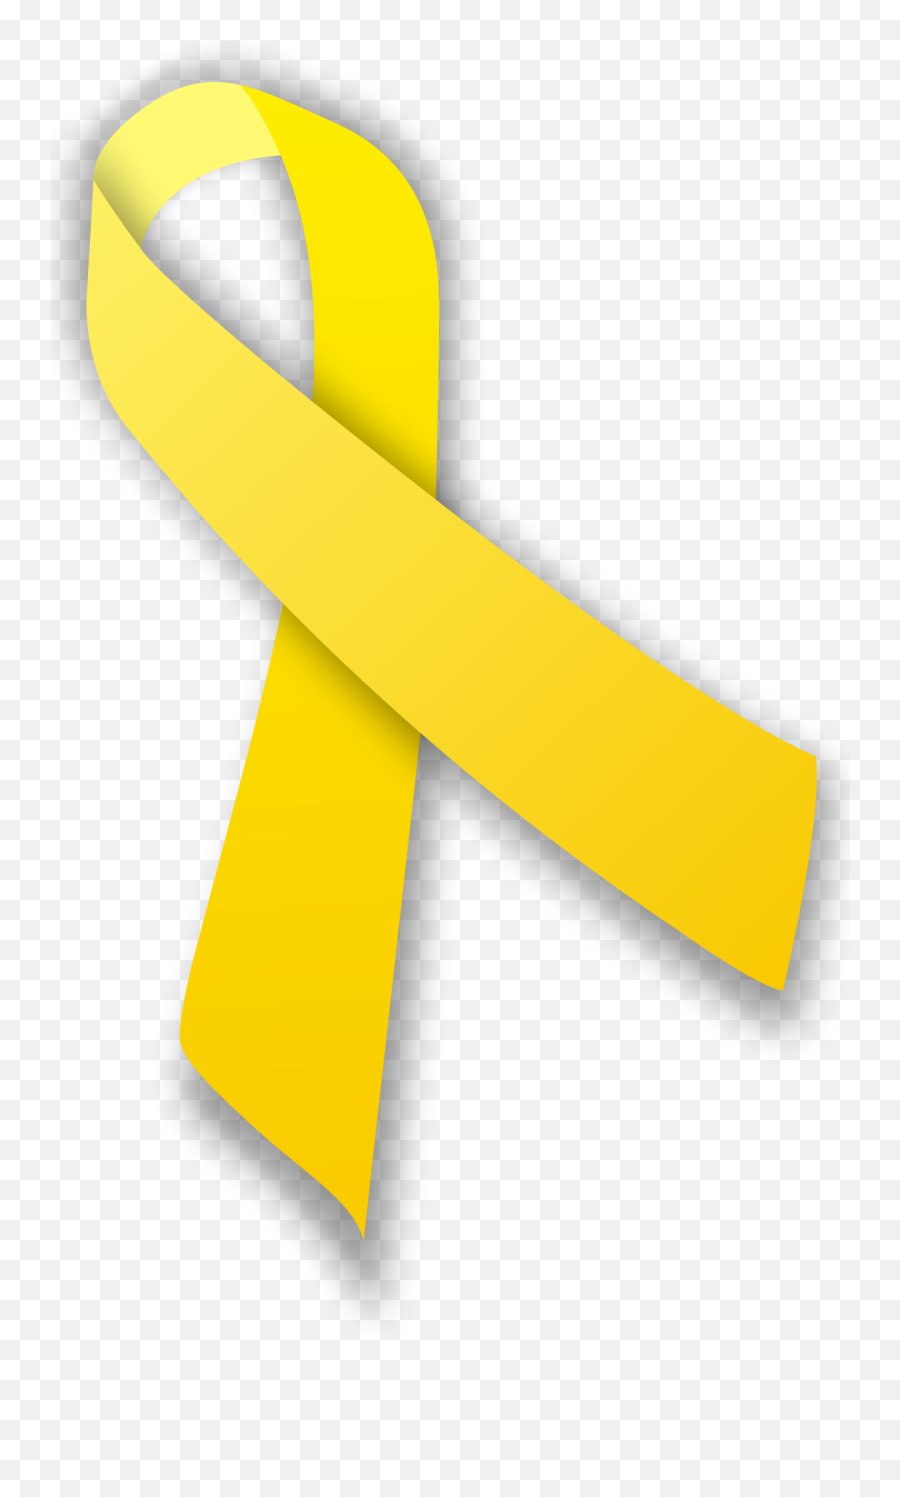 2014 Hong Kong Class Boycott Campaign - Wikipedia Yellow Spina Bifida Ribbon Png,Cory In The House Png